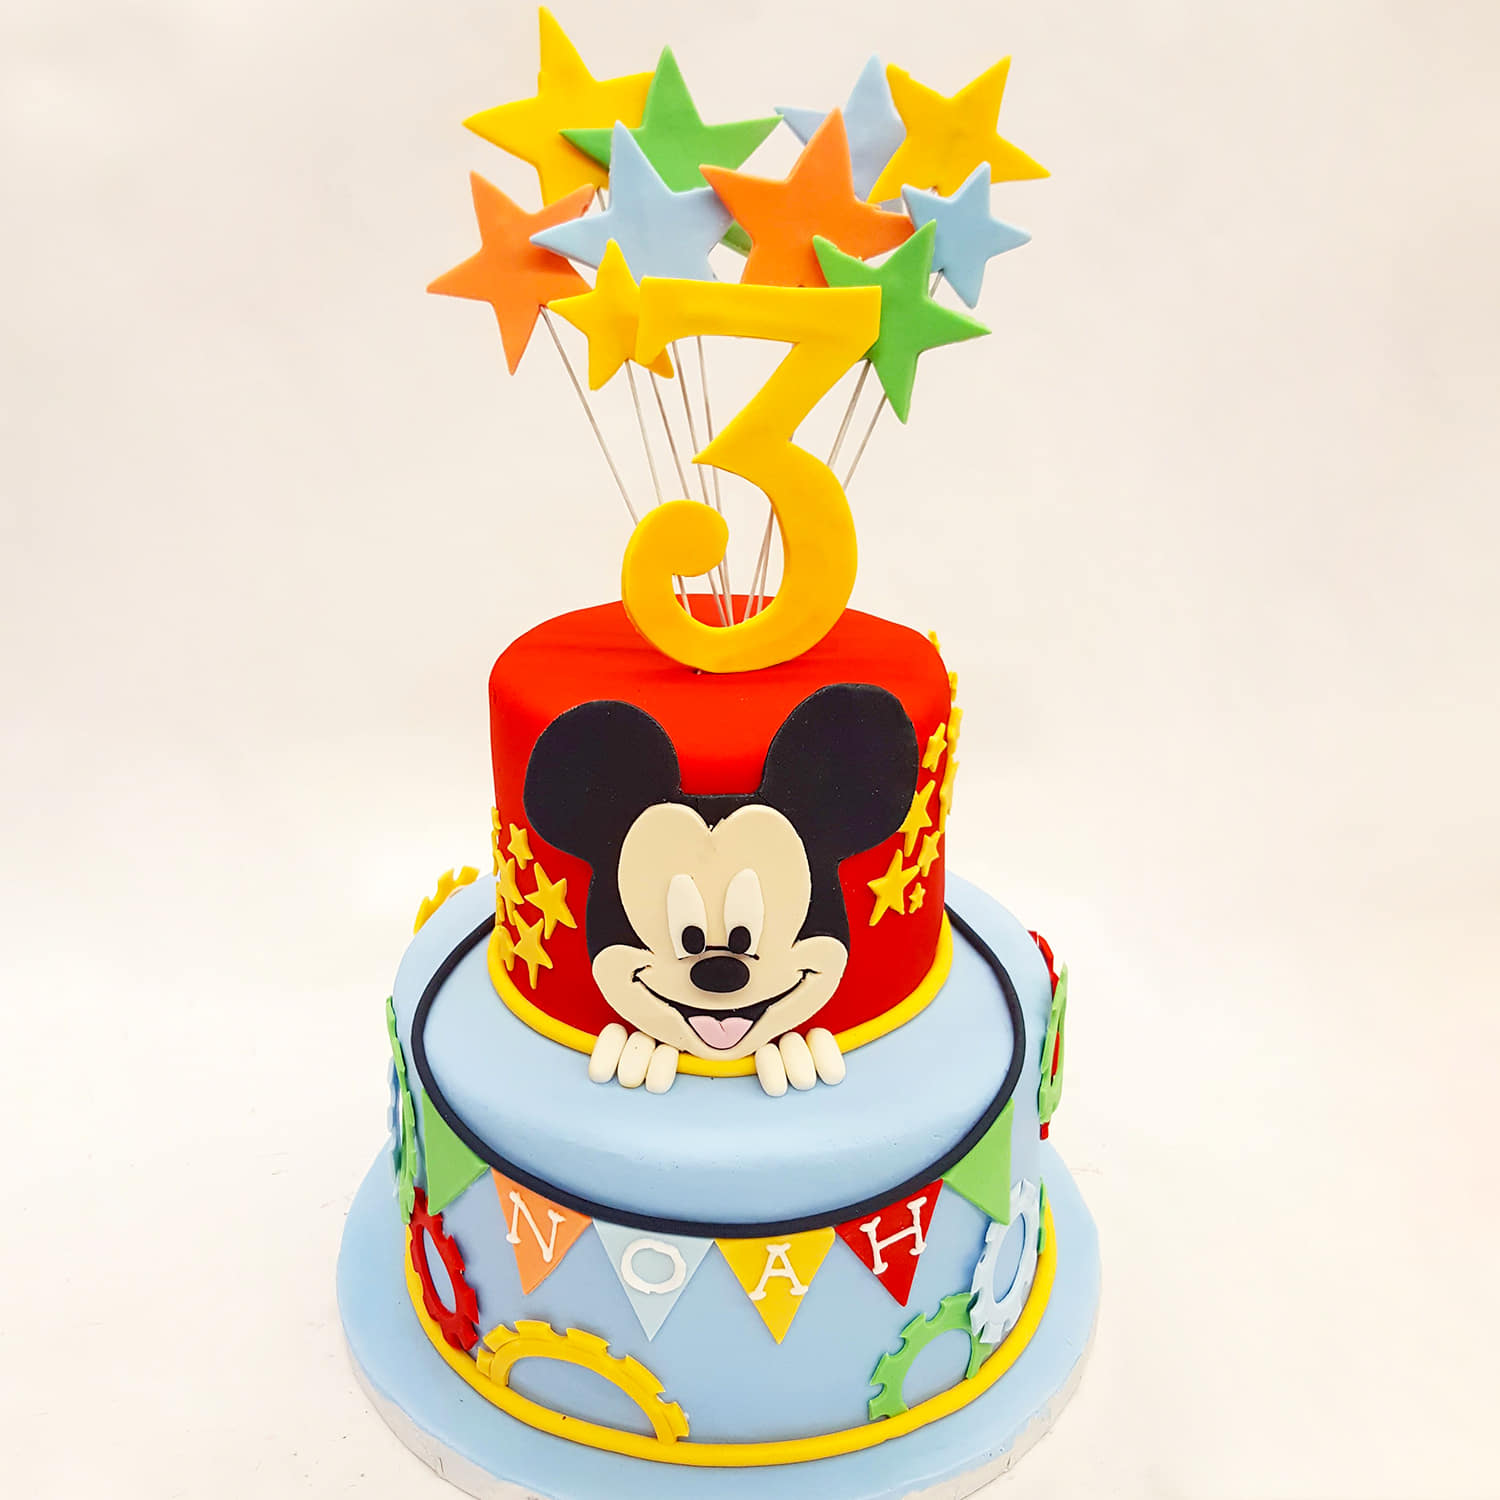 3 Tier Anniversary Cake | Order 3 Tier Anniversary Cake online | Tfcakes